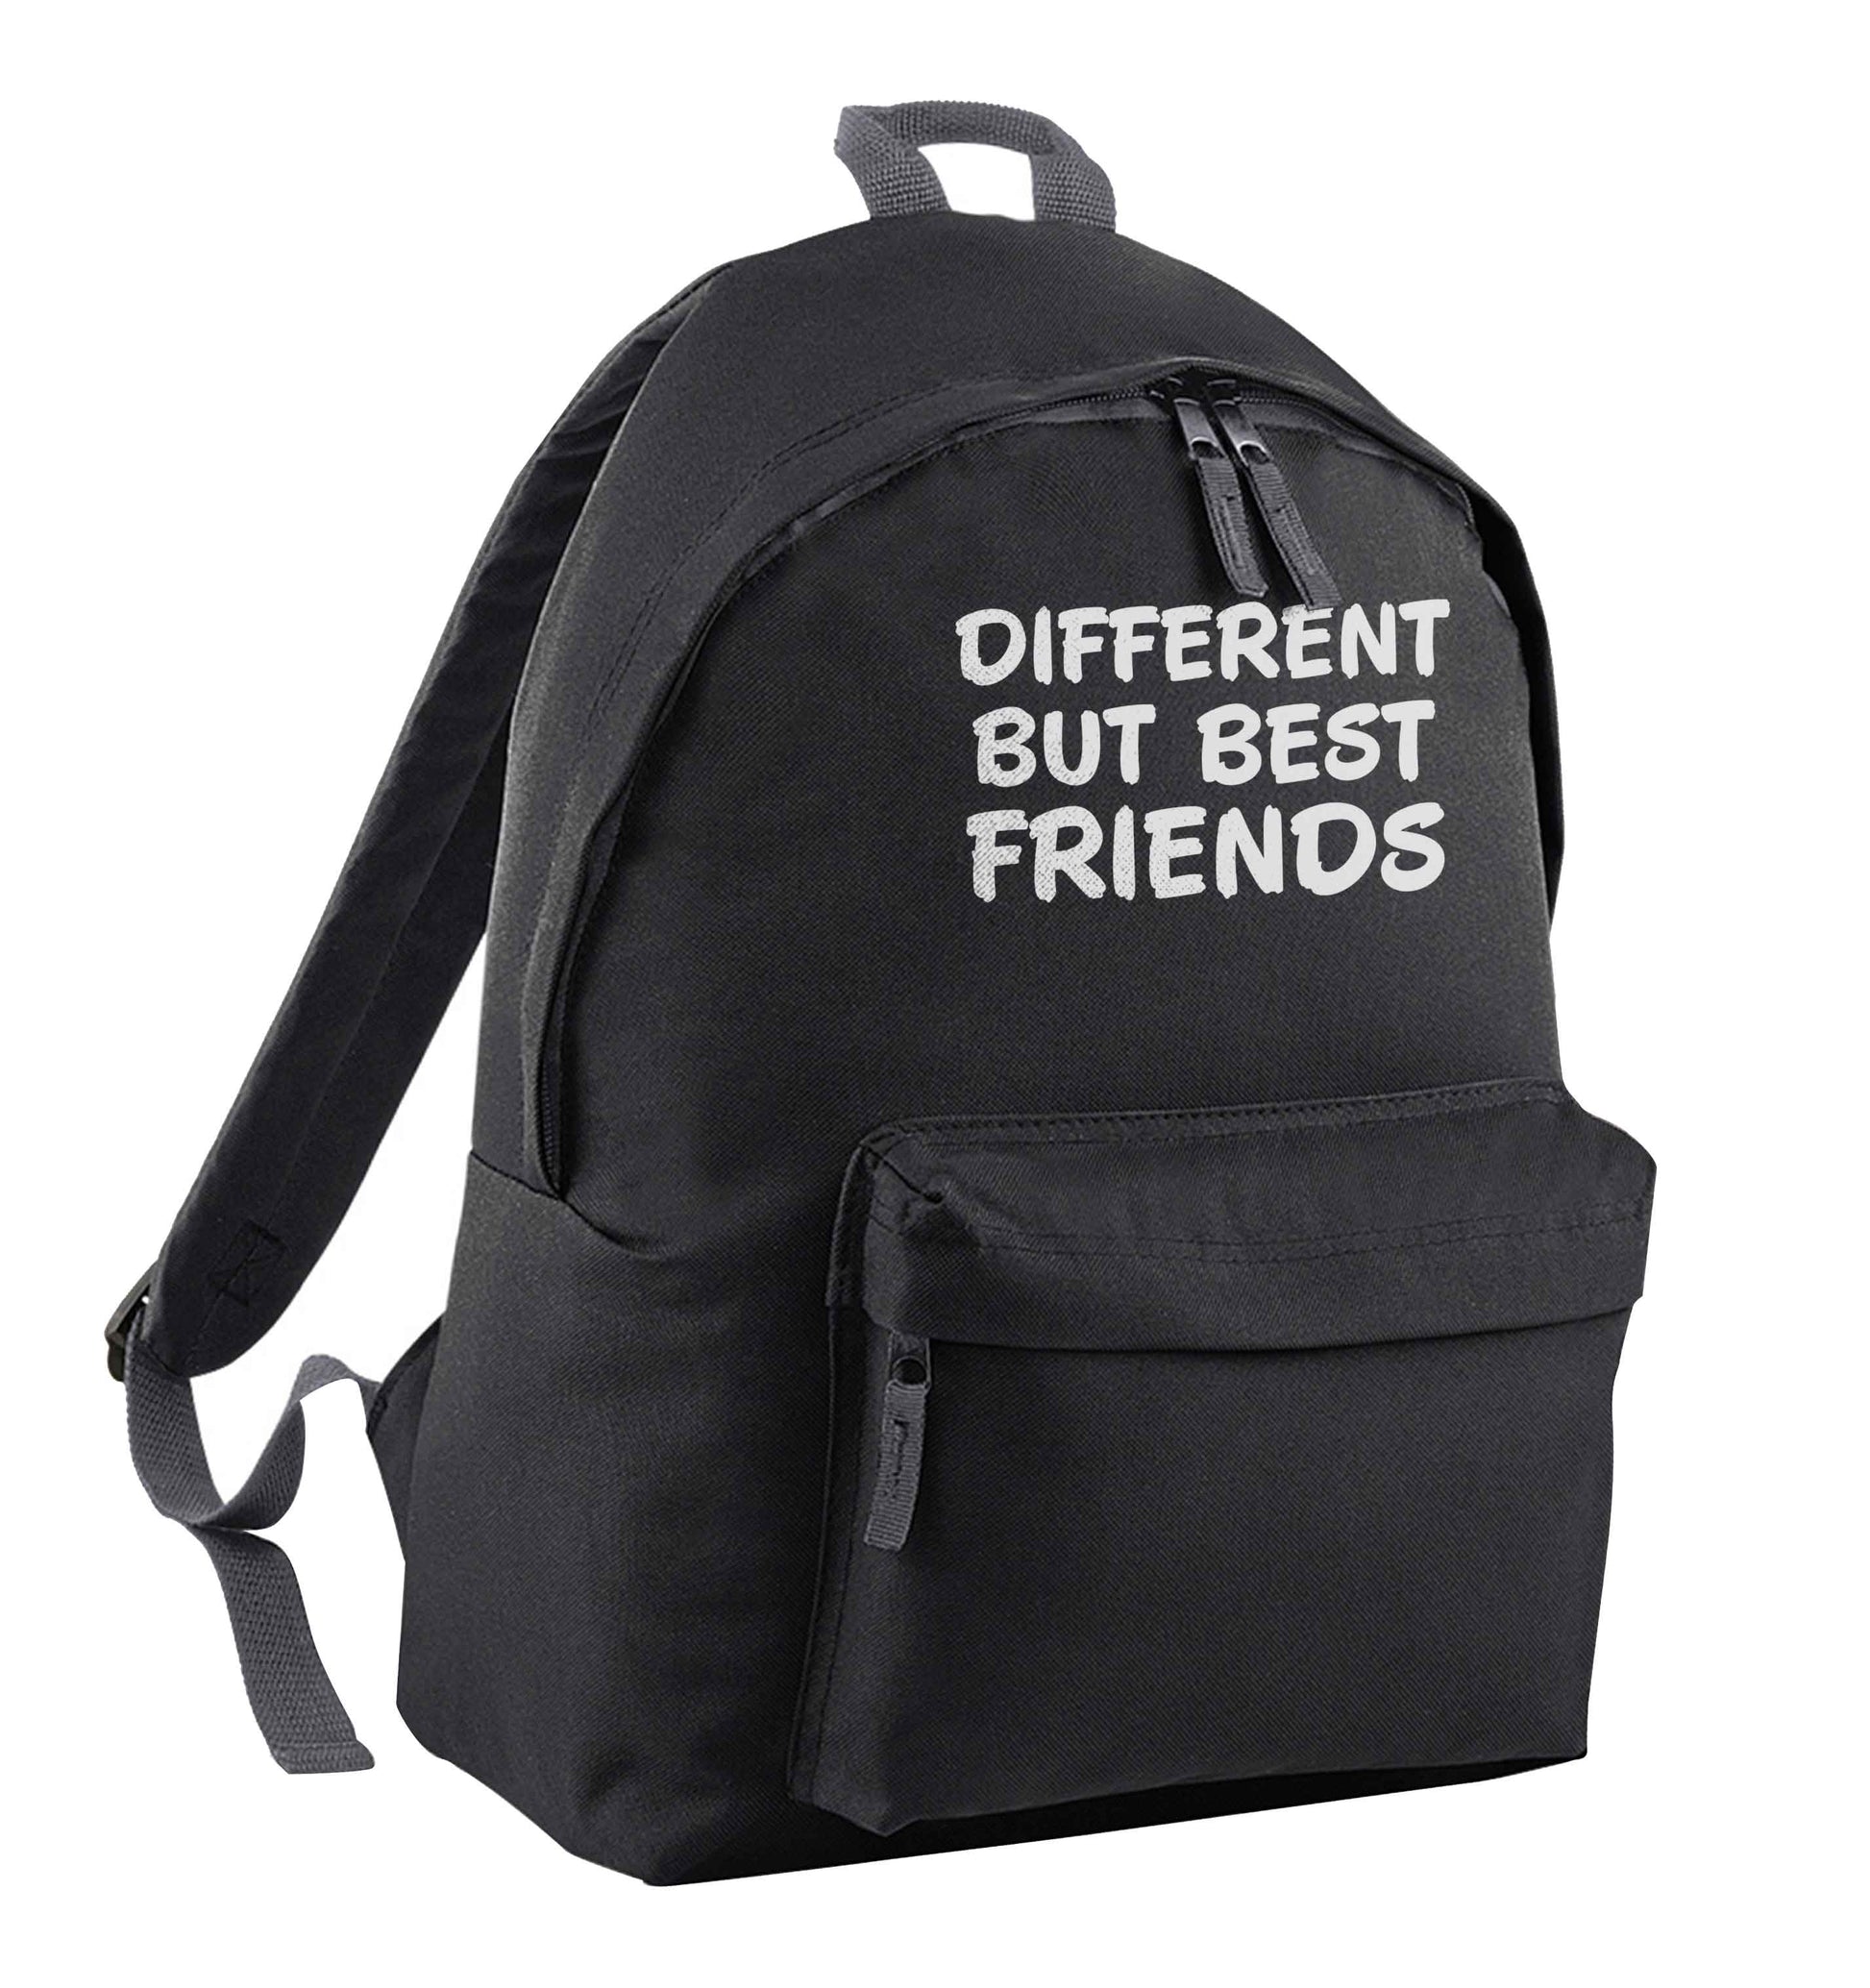 Different but best friends black children's backpack